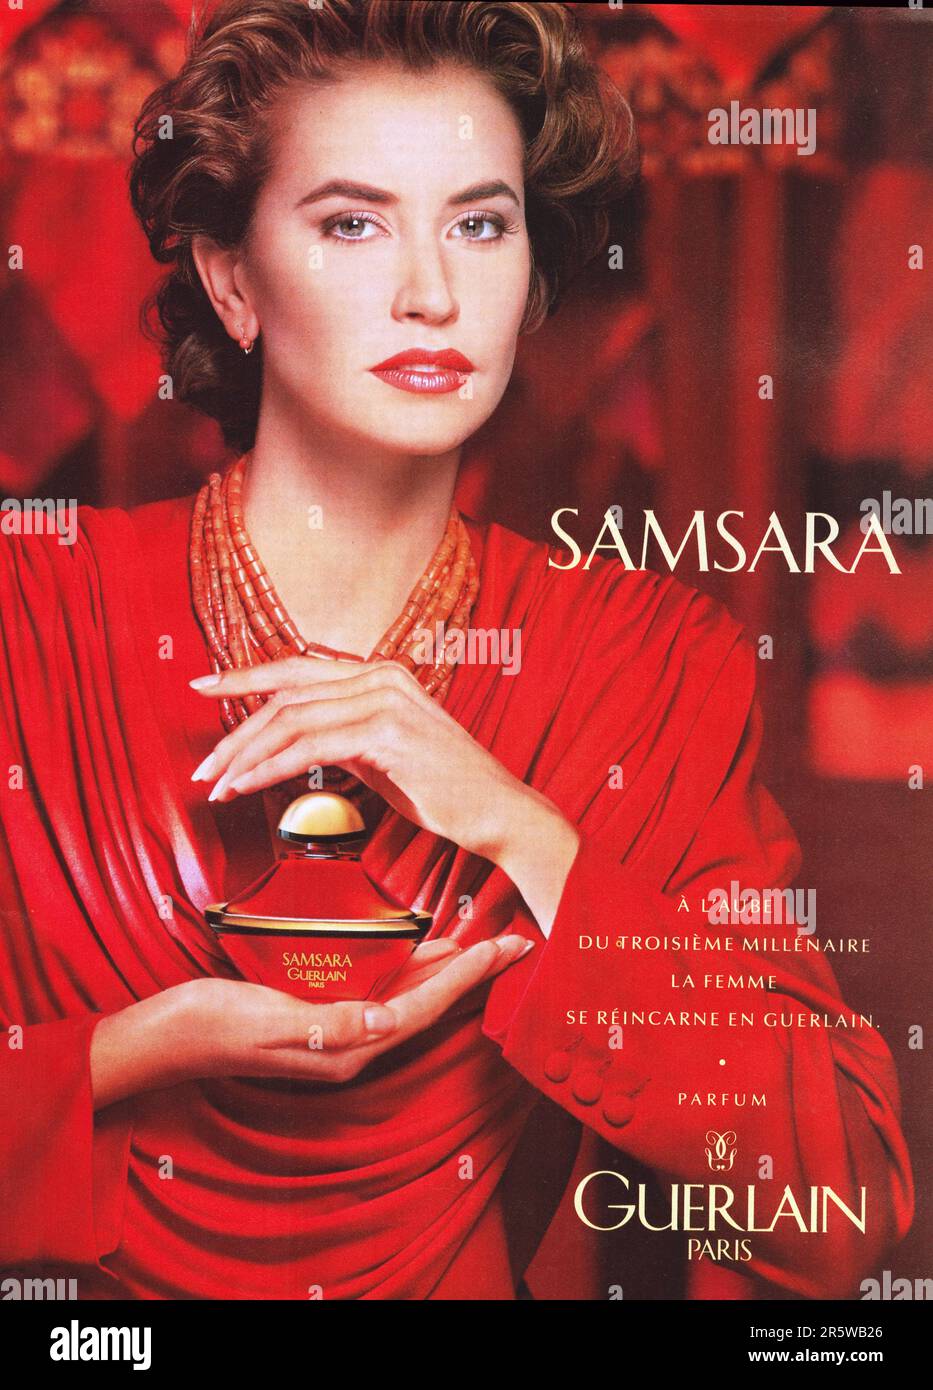 Guerlain Samsara perfume advertisement Guerlain Samsara publicite Stock Photo